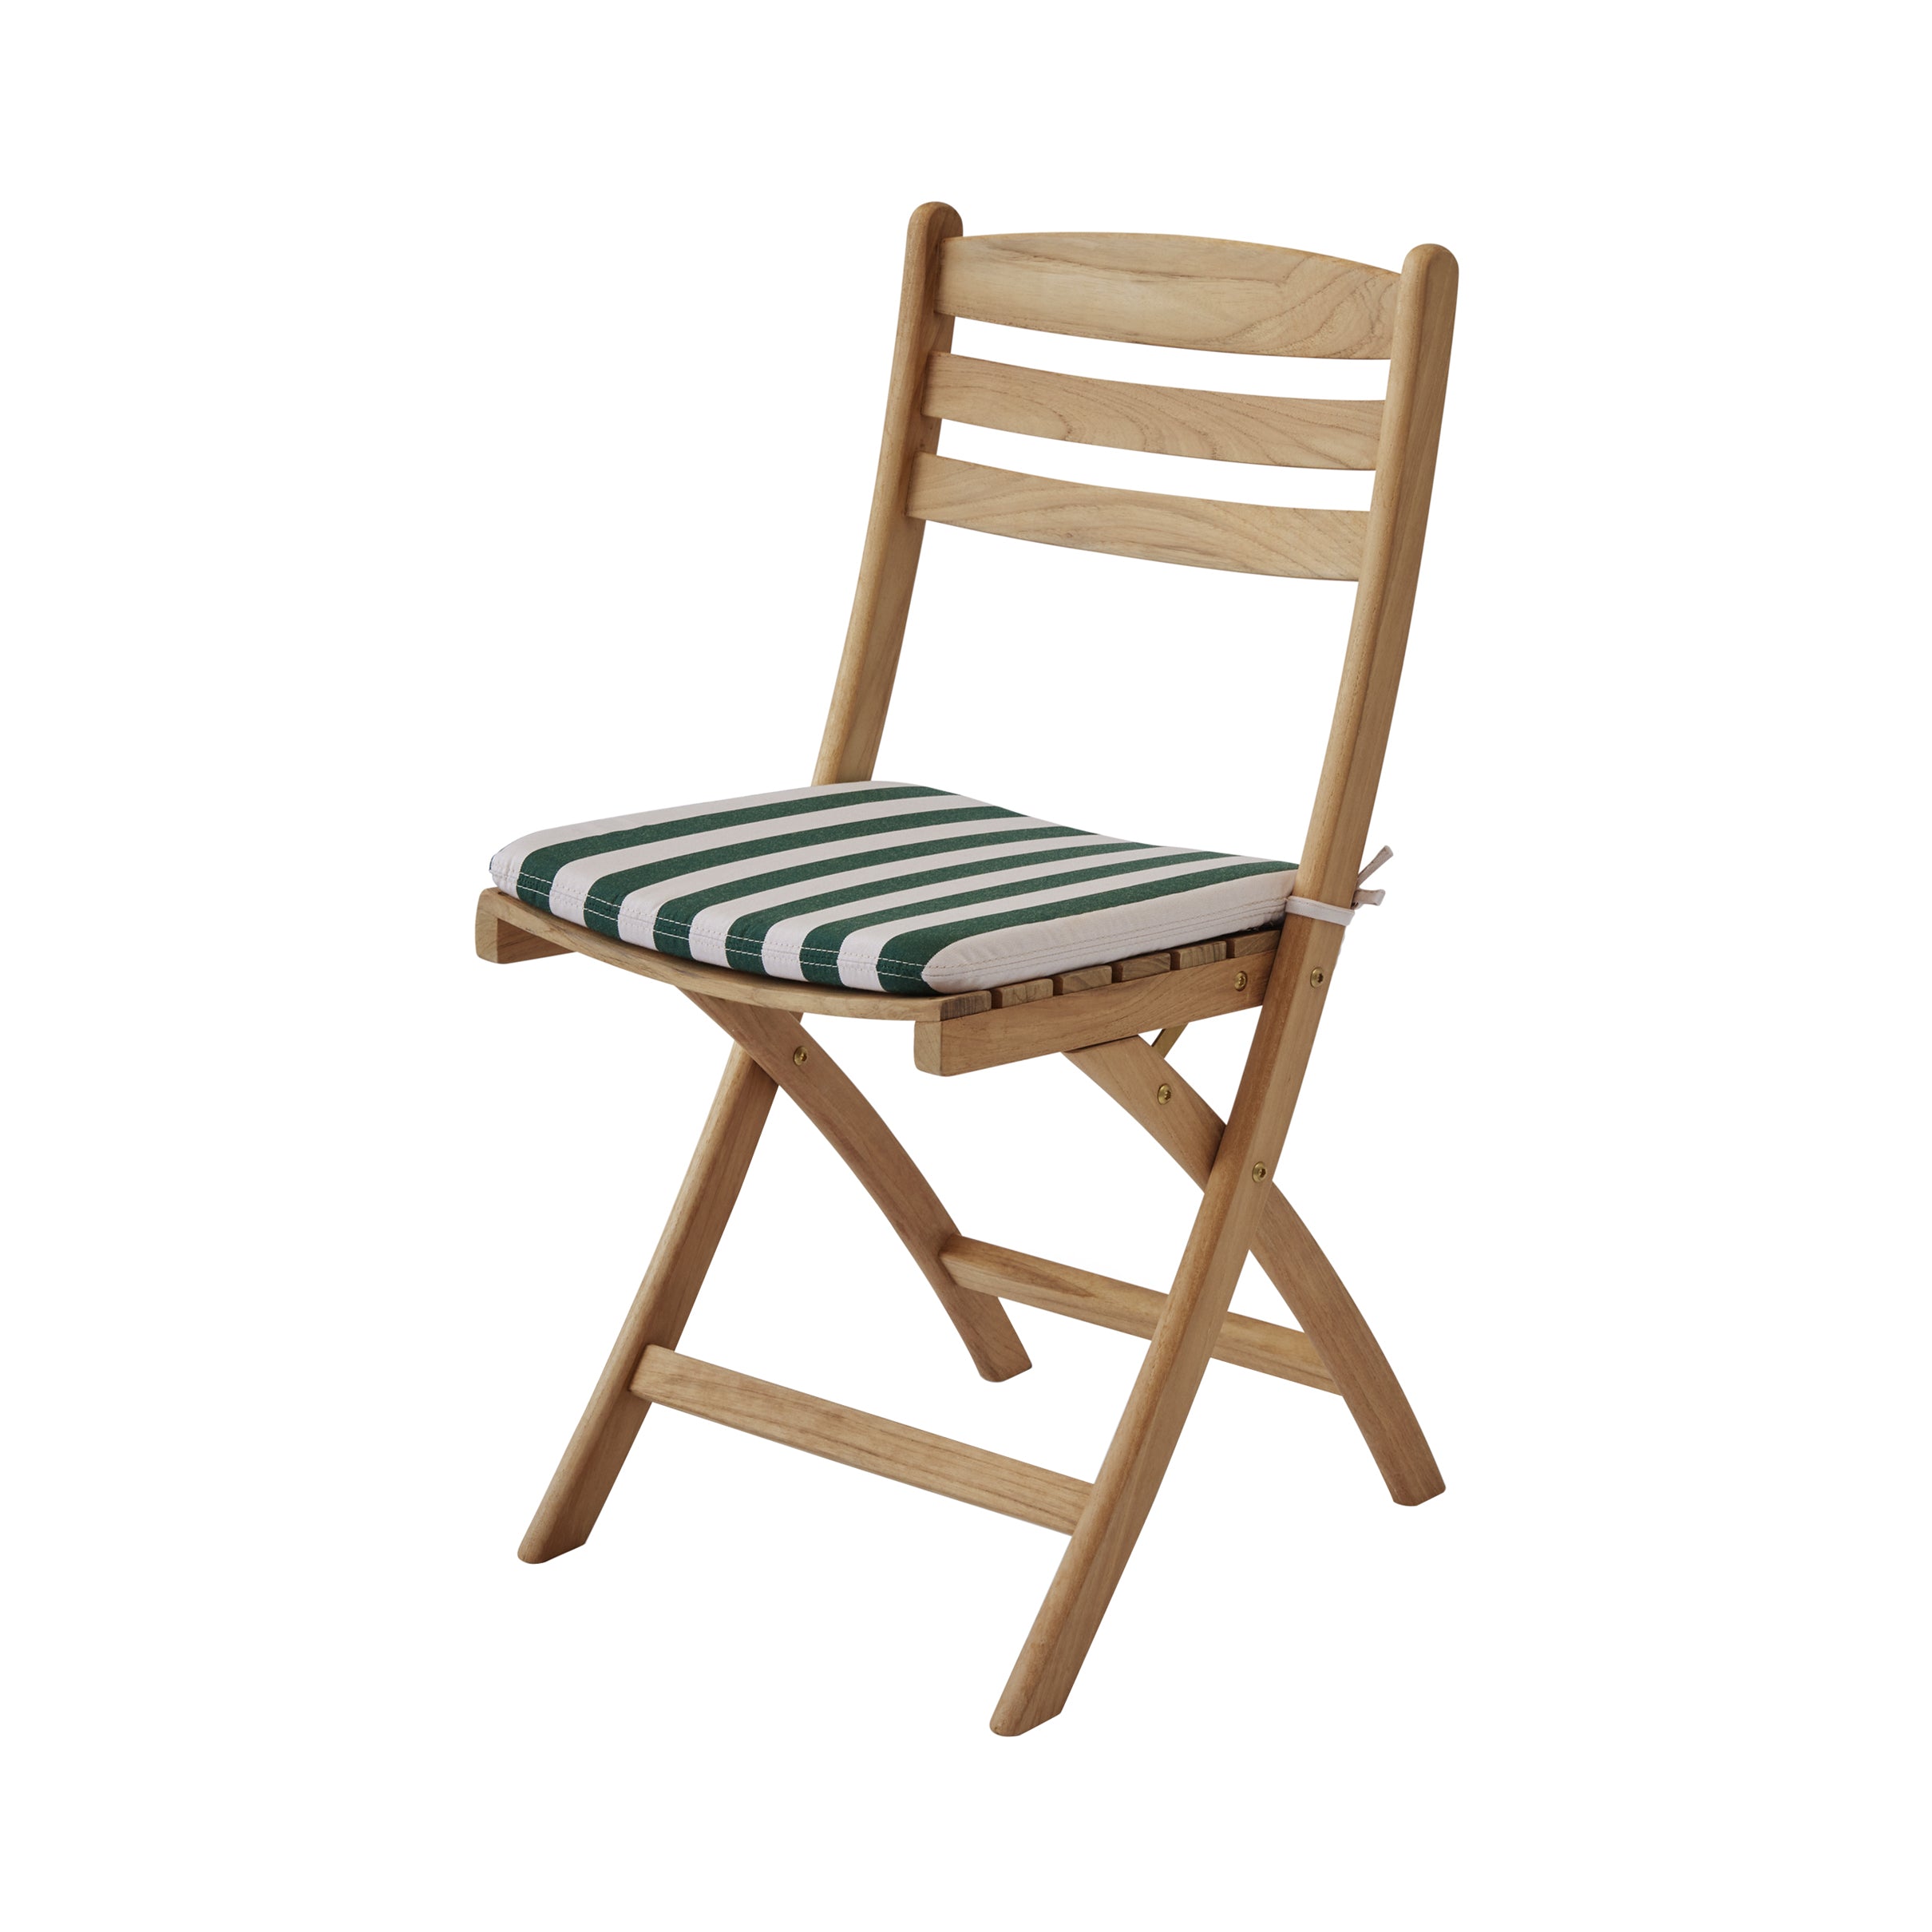 Selandia Chair: With Light Apricot + Dark Green Stripe Cushion